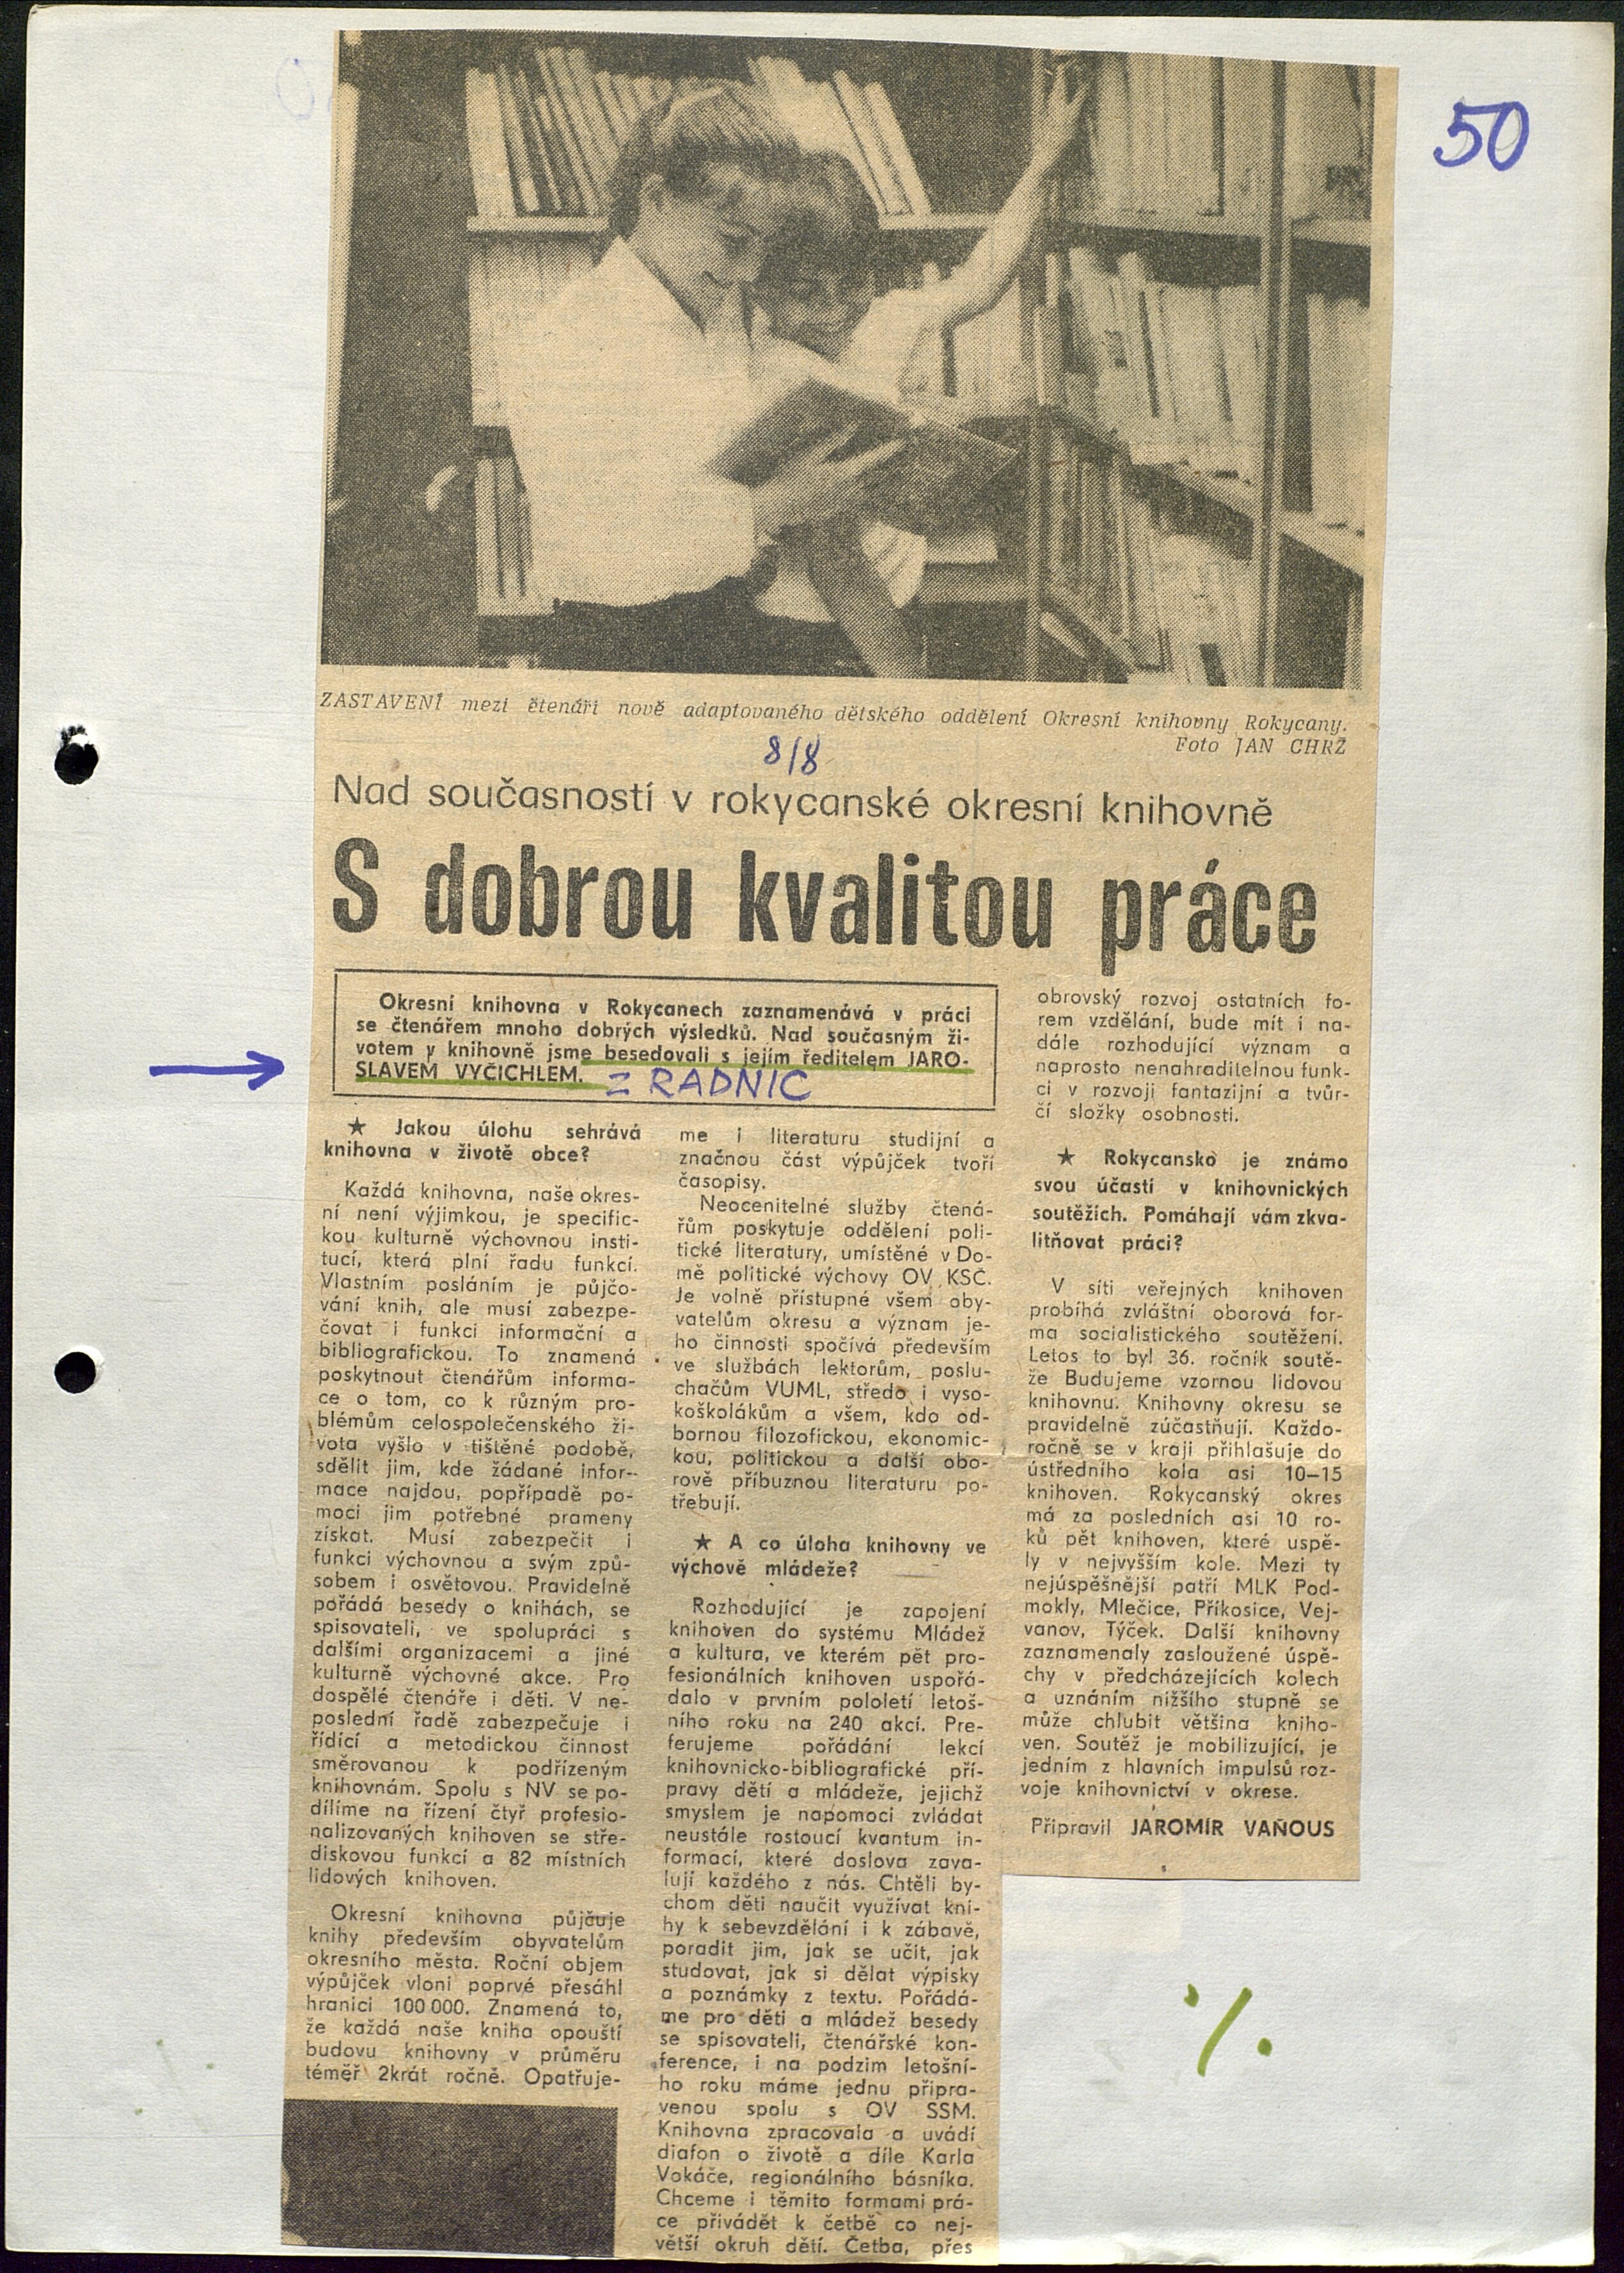 72. soap-ro_00152_mesto-radnice-priloha-1986-1987_0720